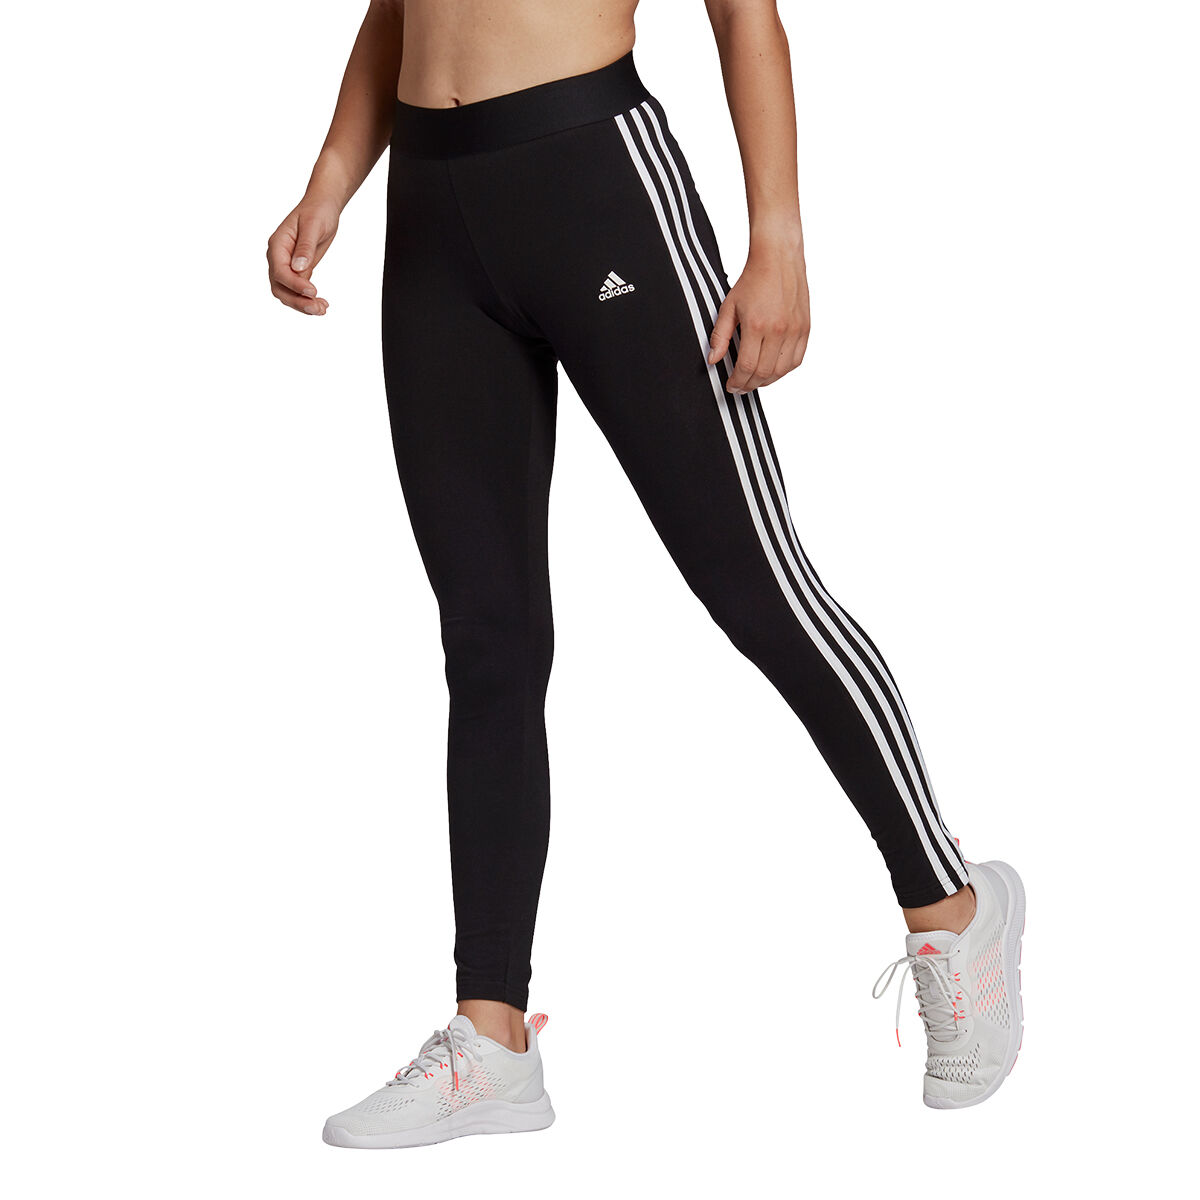 XS, Adidas, Tights & leggings, Womens sports clothing, Sports & leisure